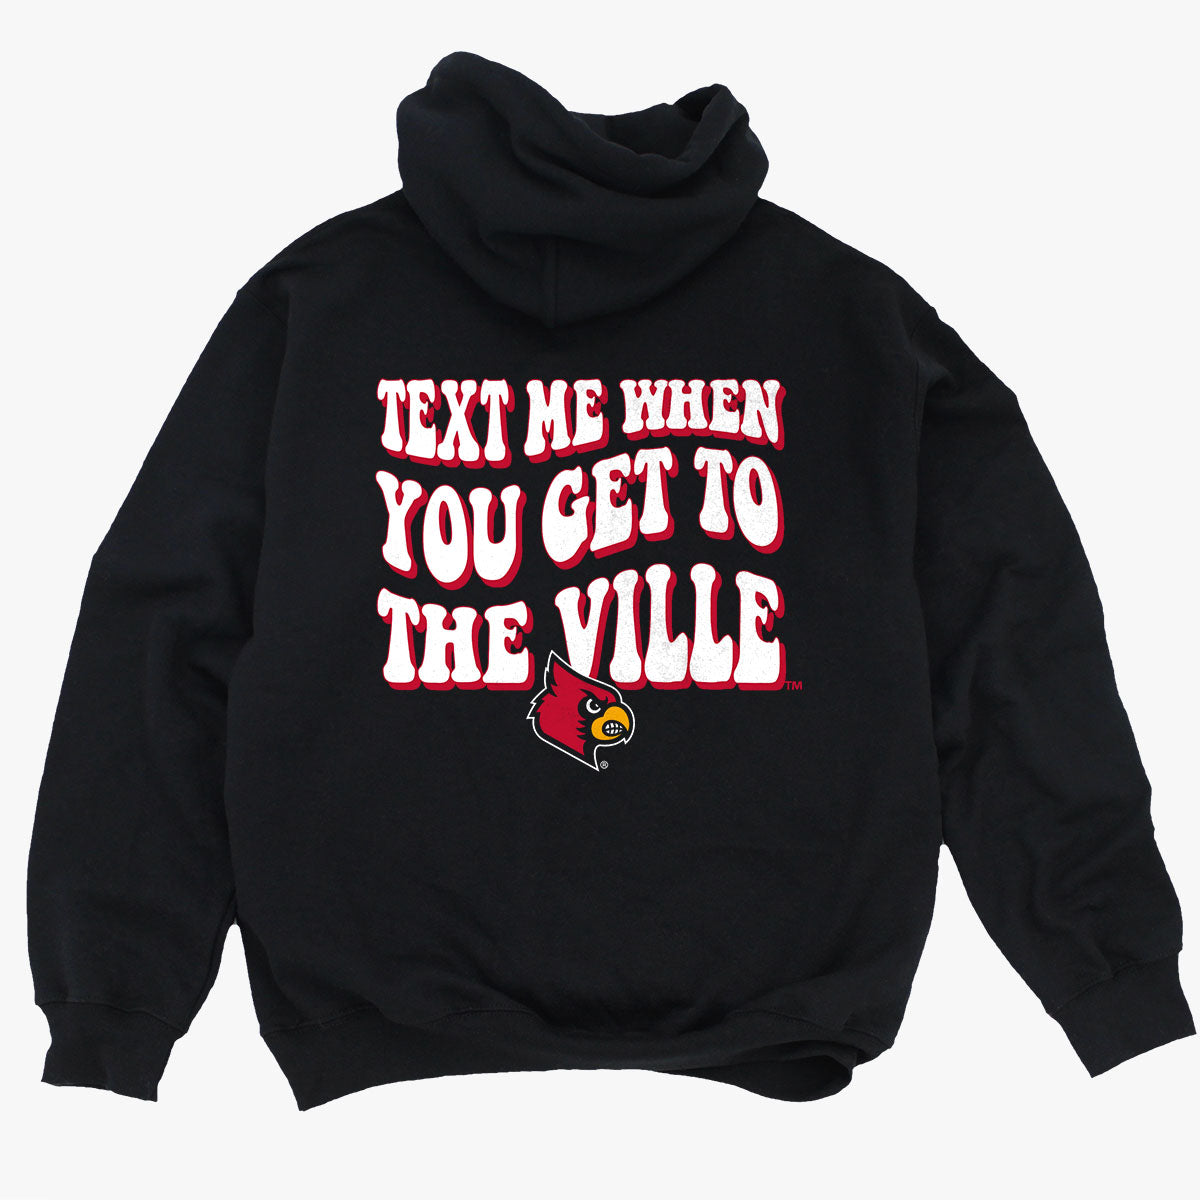 University of Louisville Cardinals Hooded Sweatshirt | Champion Products | Granite Heather | Small